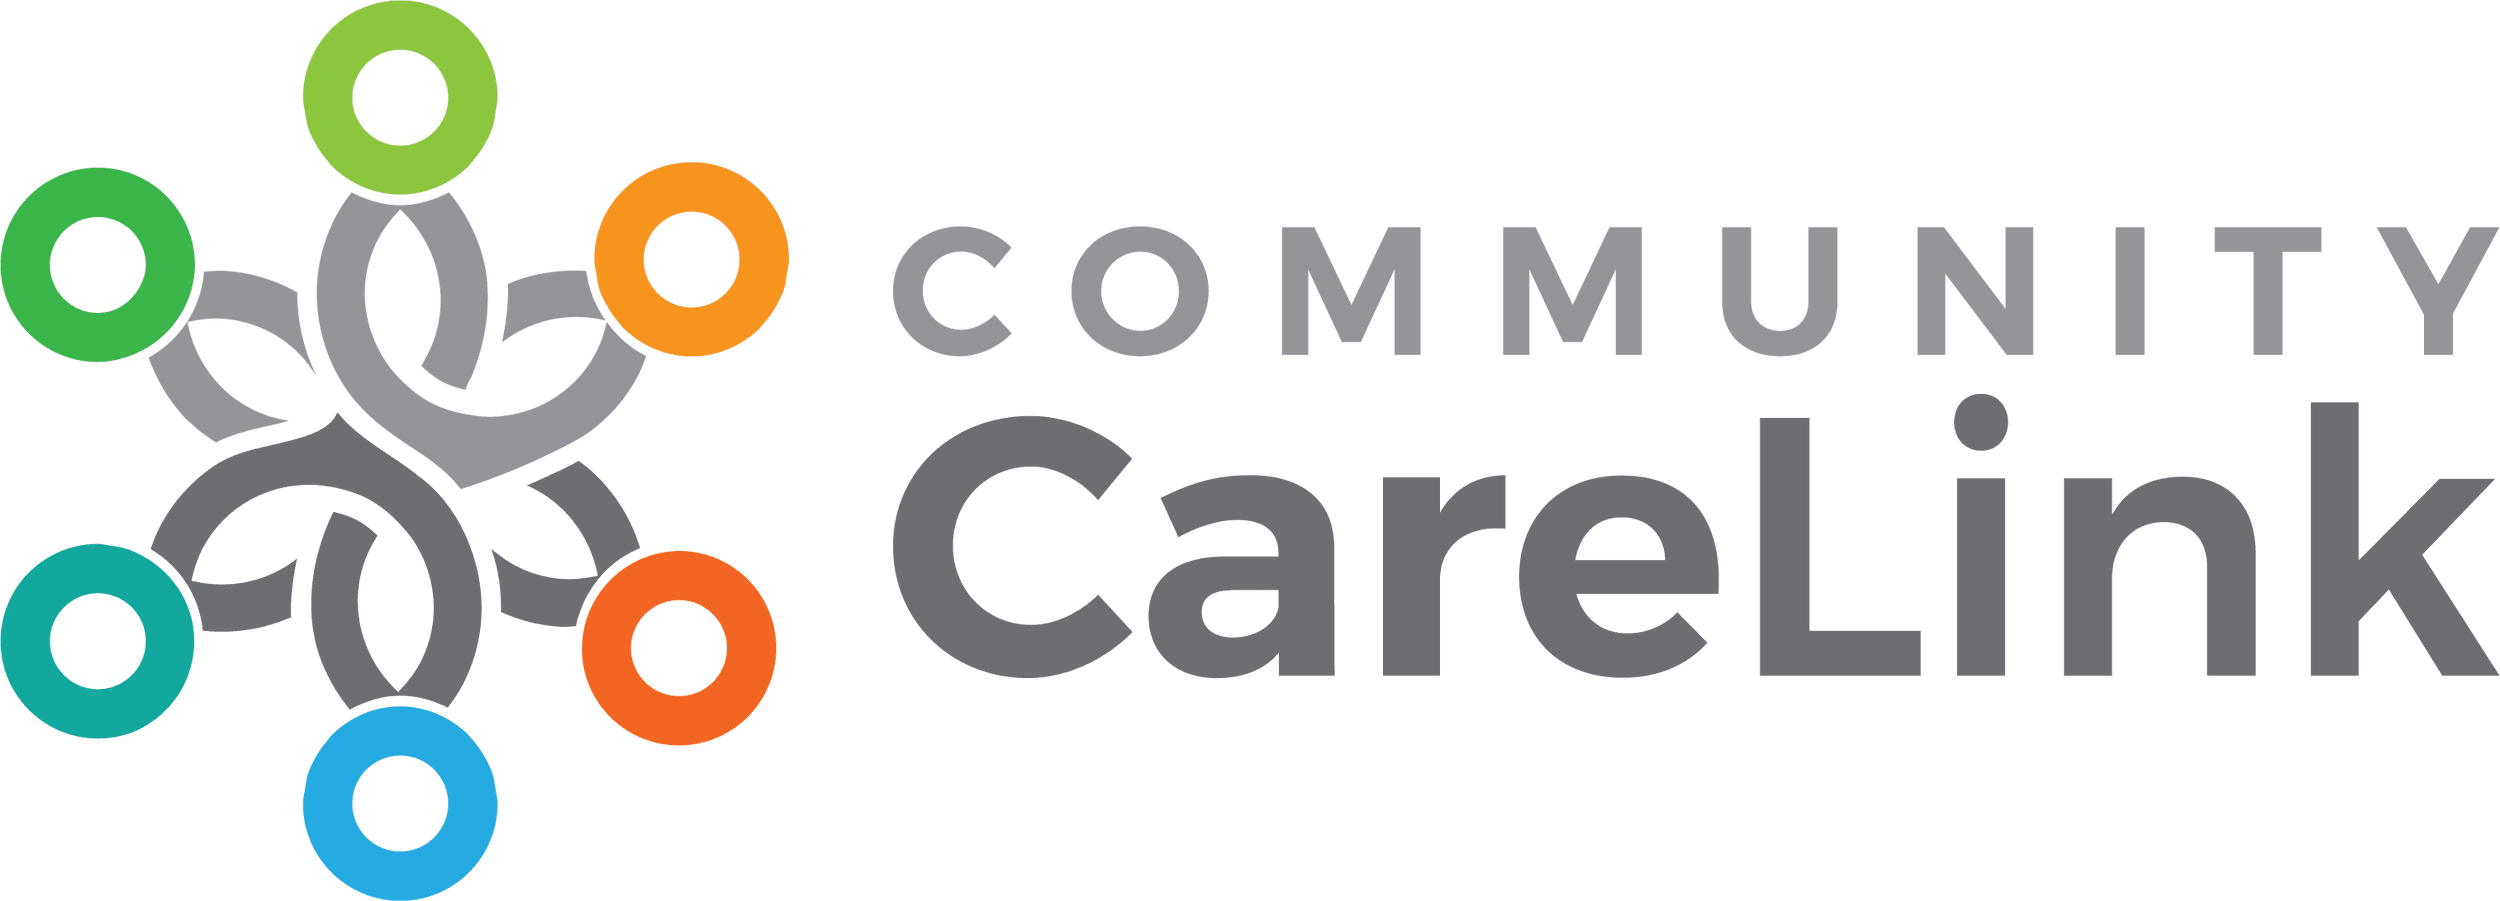 Community CareLink